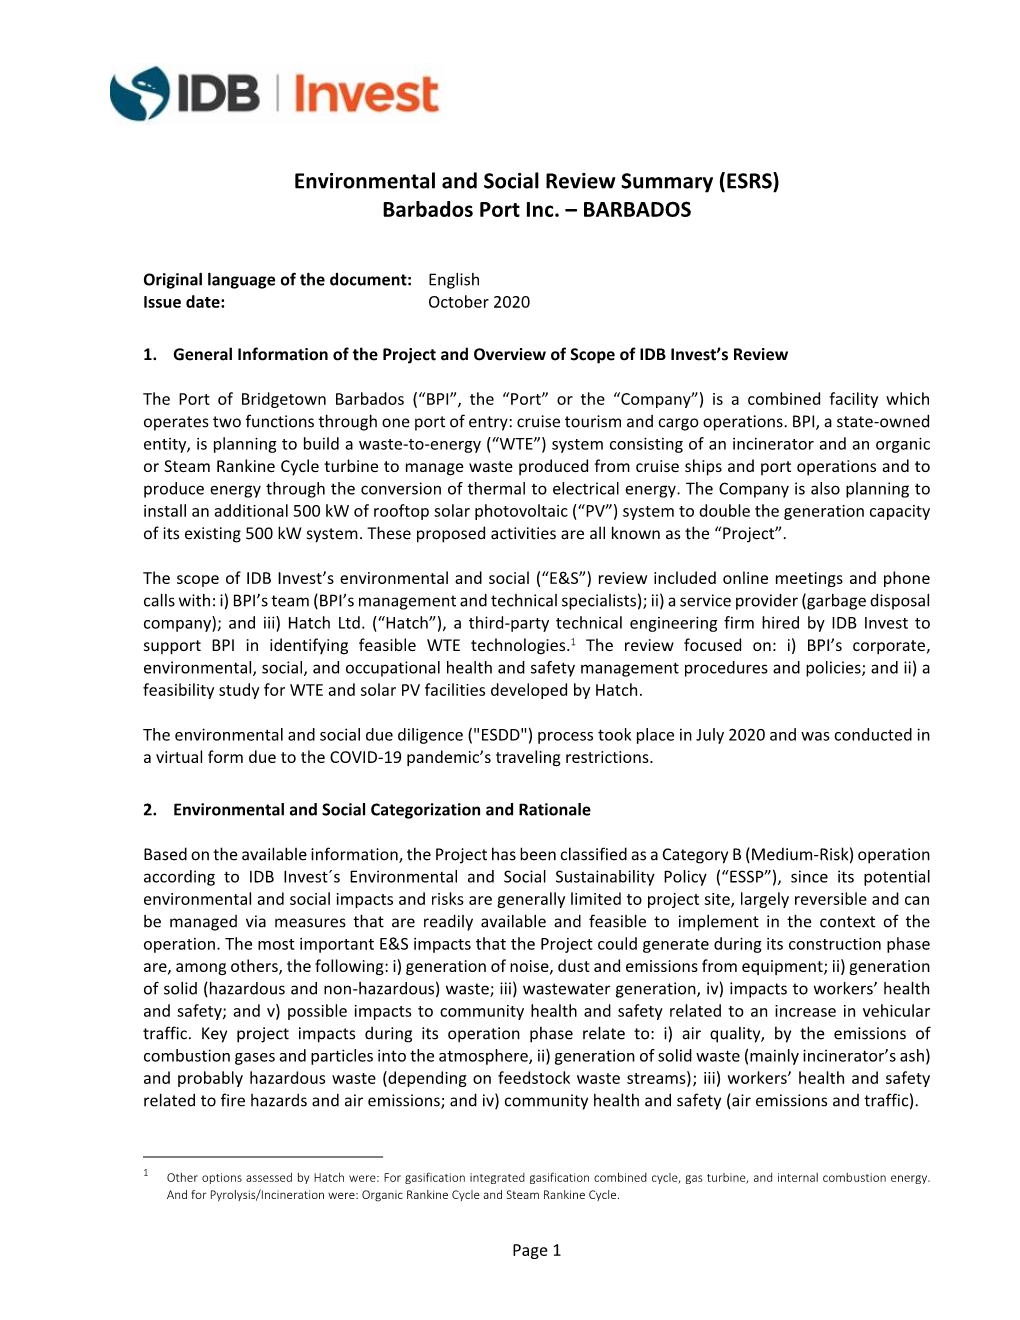 Environmental and Social Review Summary (ESRS) Barbados Port Inc